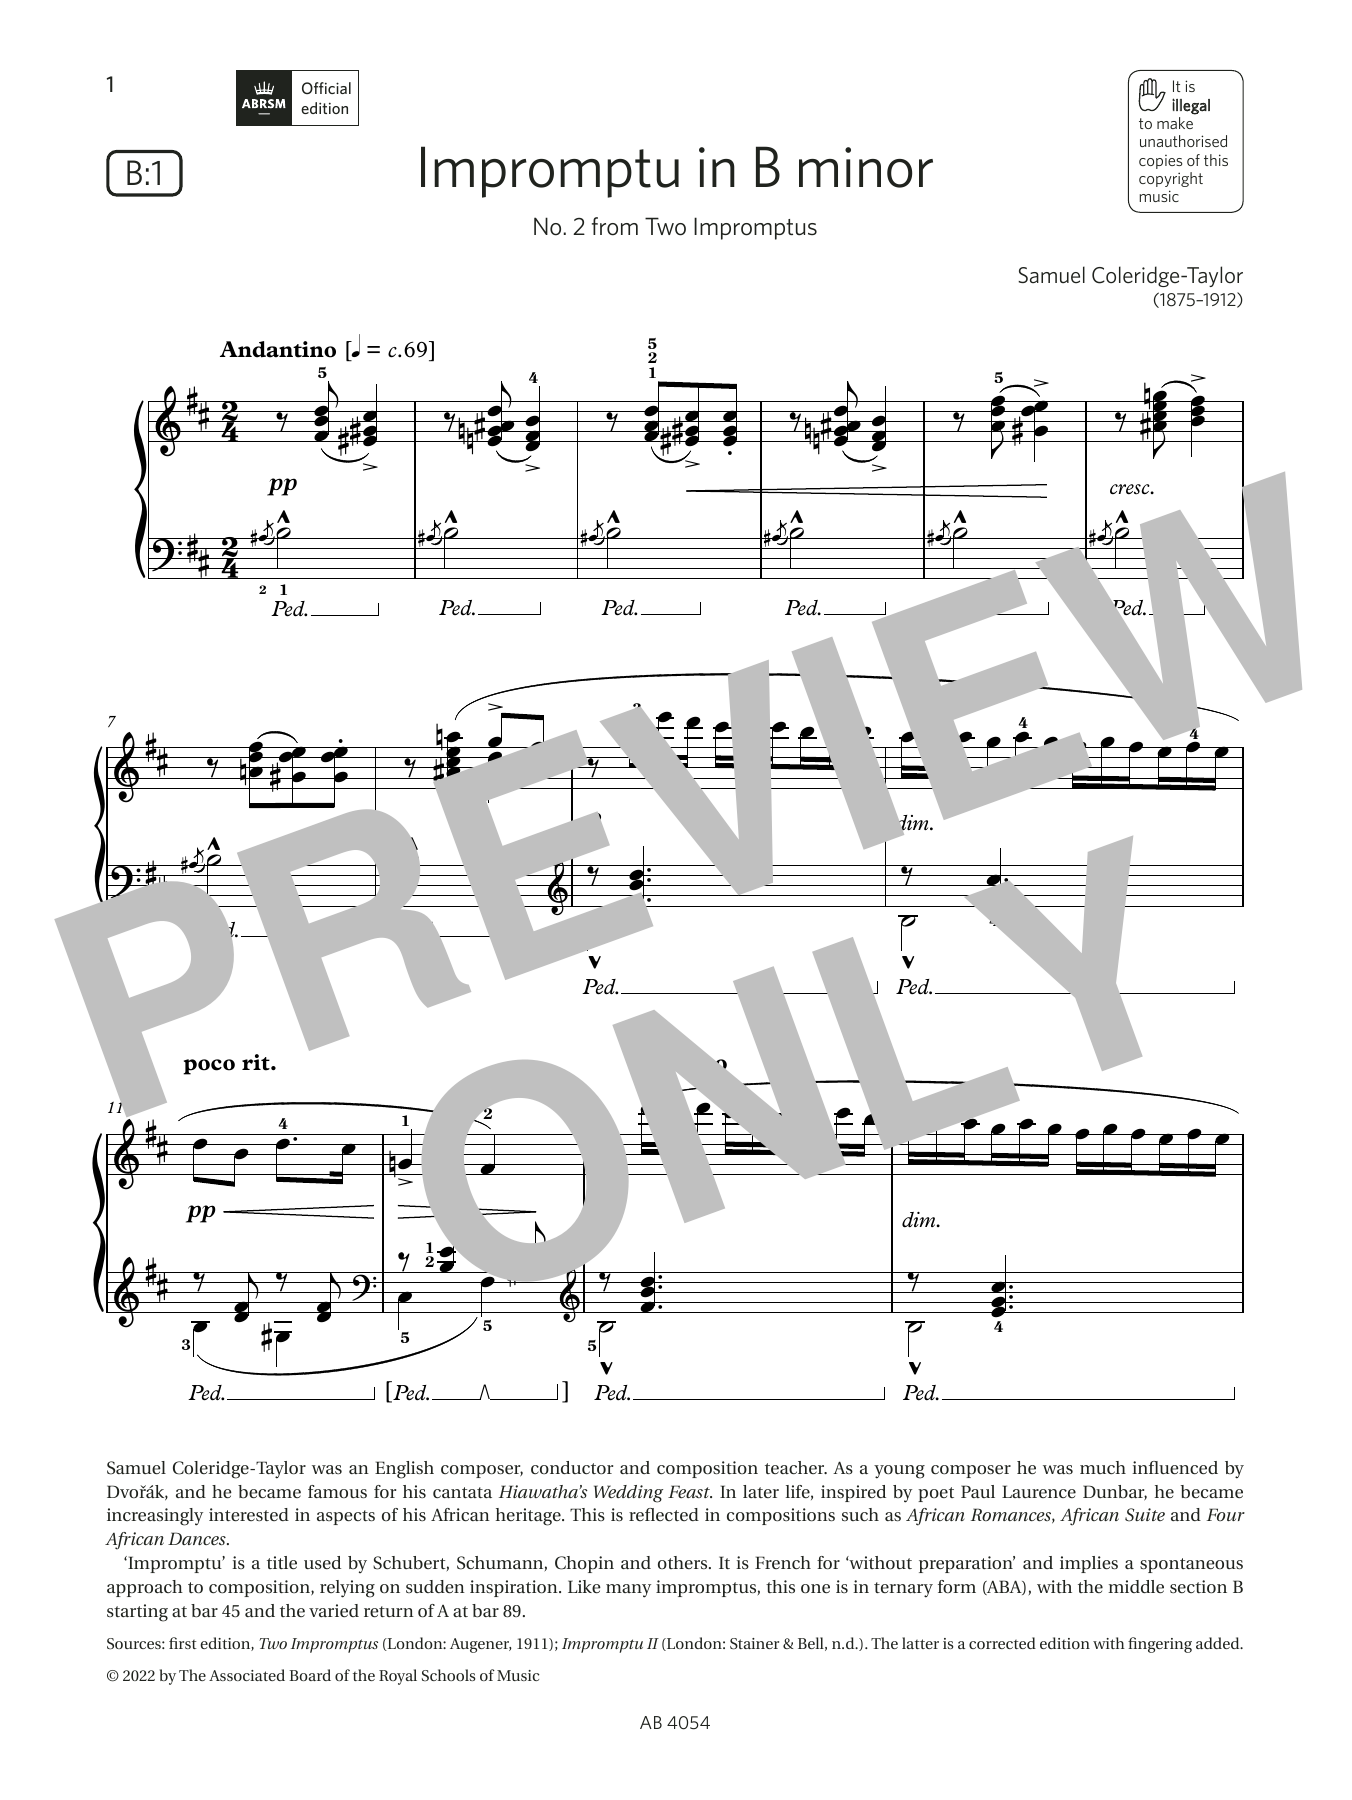 Download Samuel Coleridge-Taylor Impromptu in B minor (Grade 8, list B1, Sheet Music